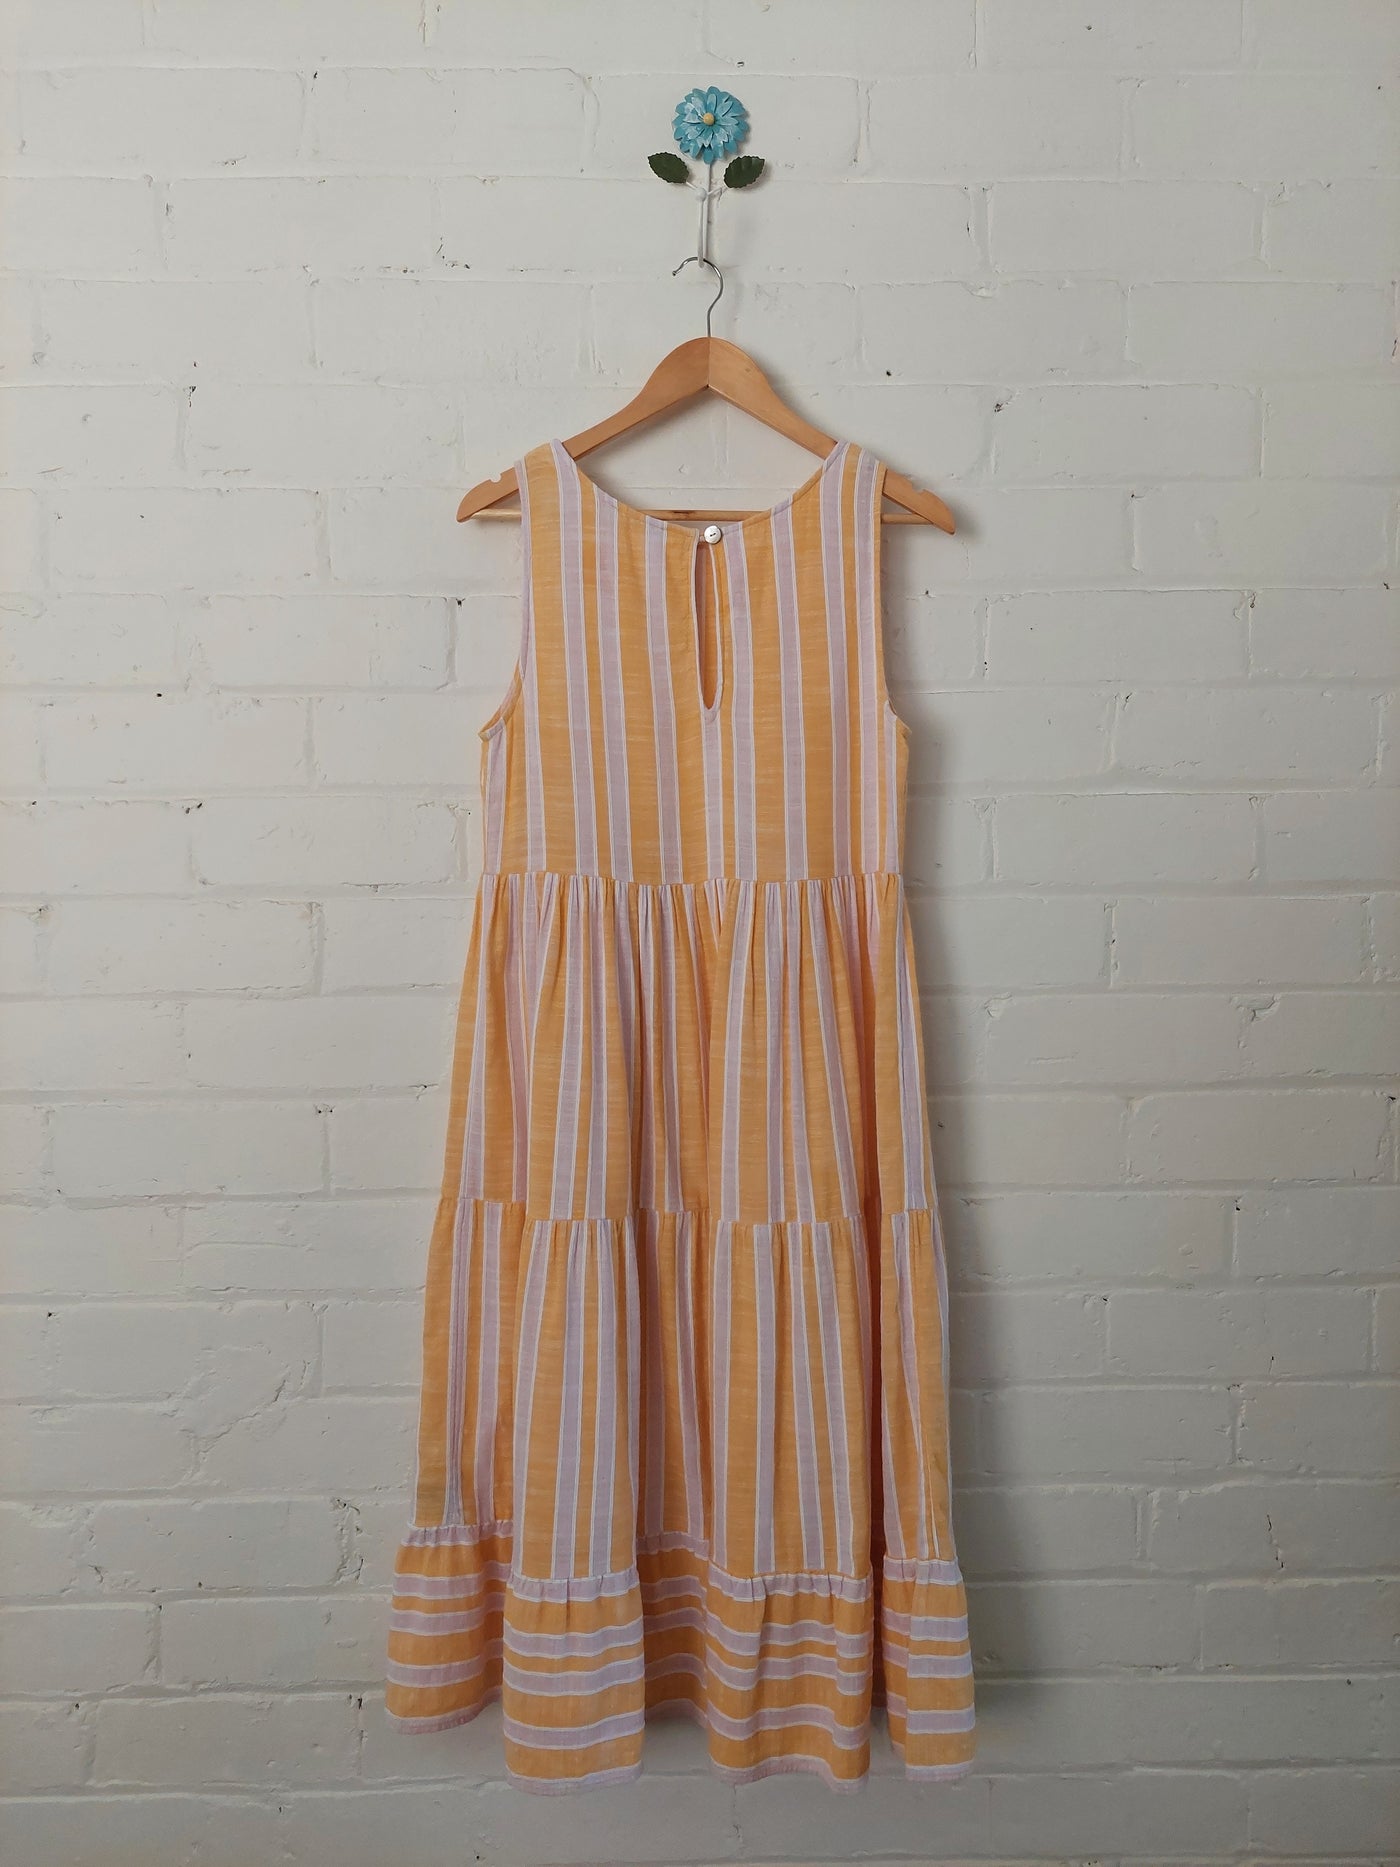 Mister Zimi 'Olivia' Midi Dress in Mustard Stripe, Size 10